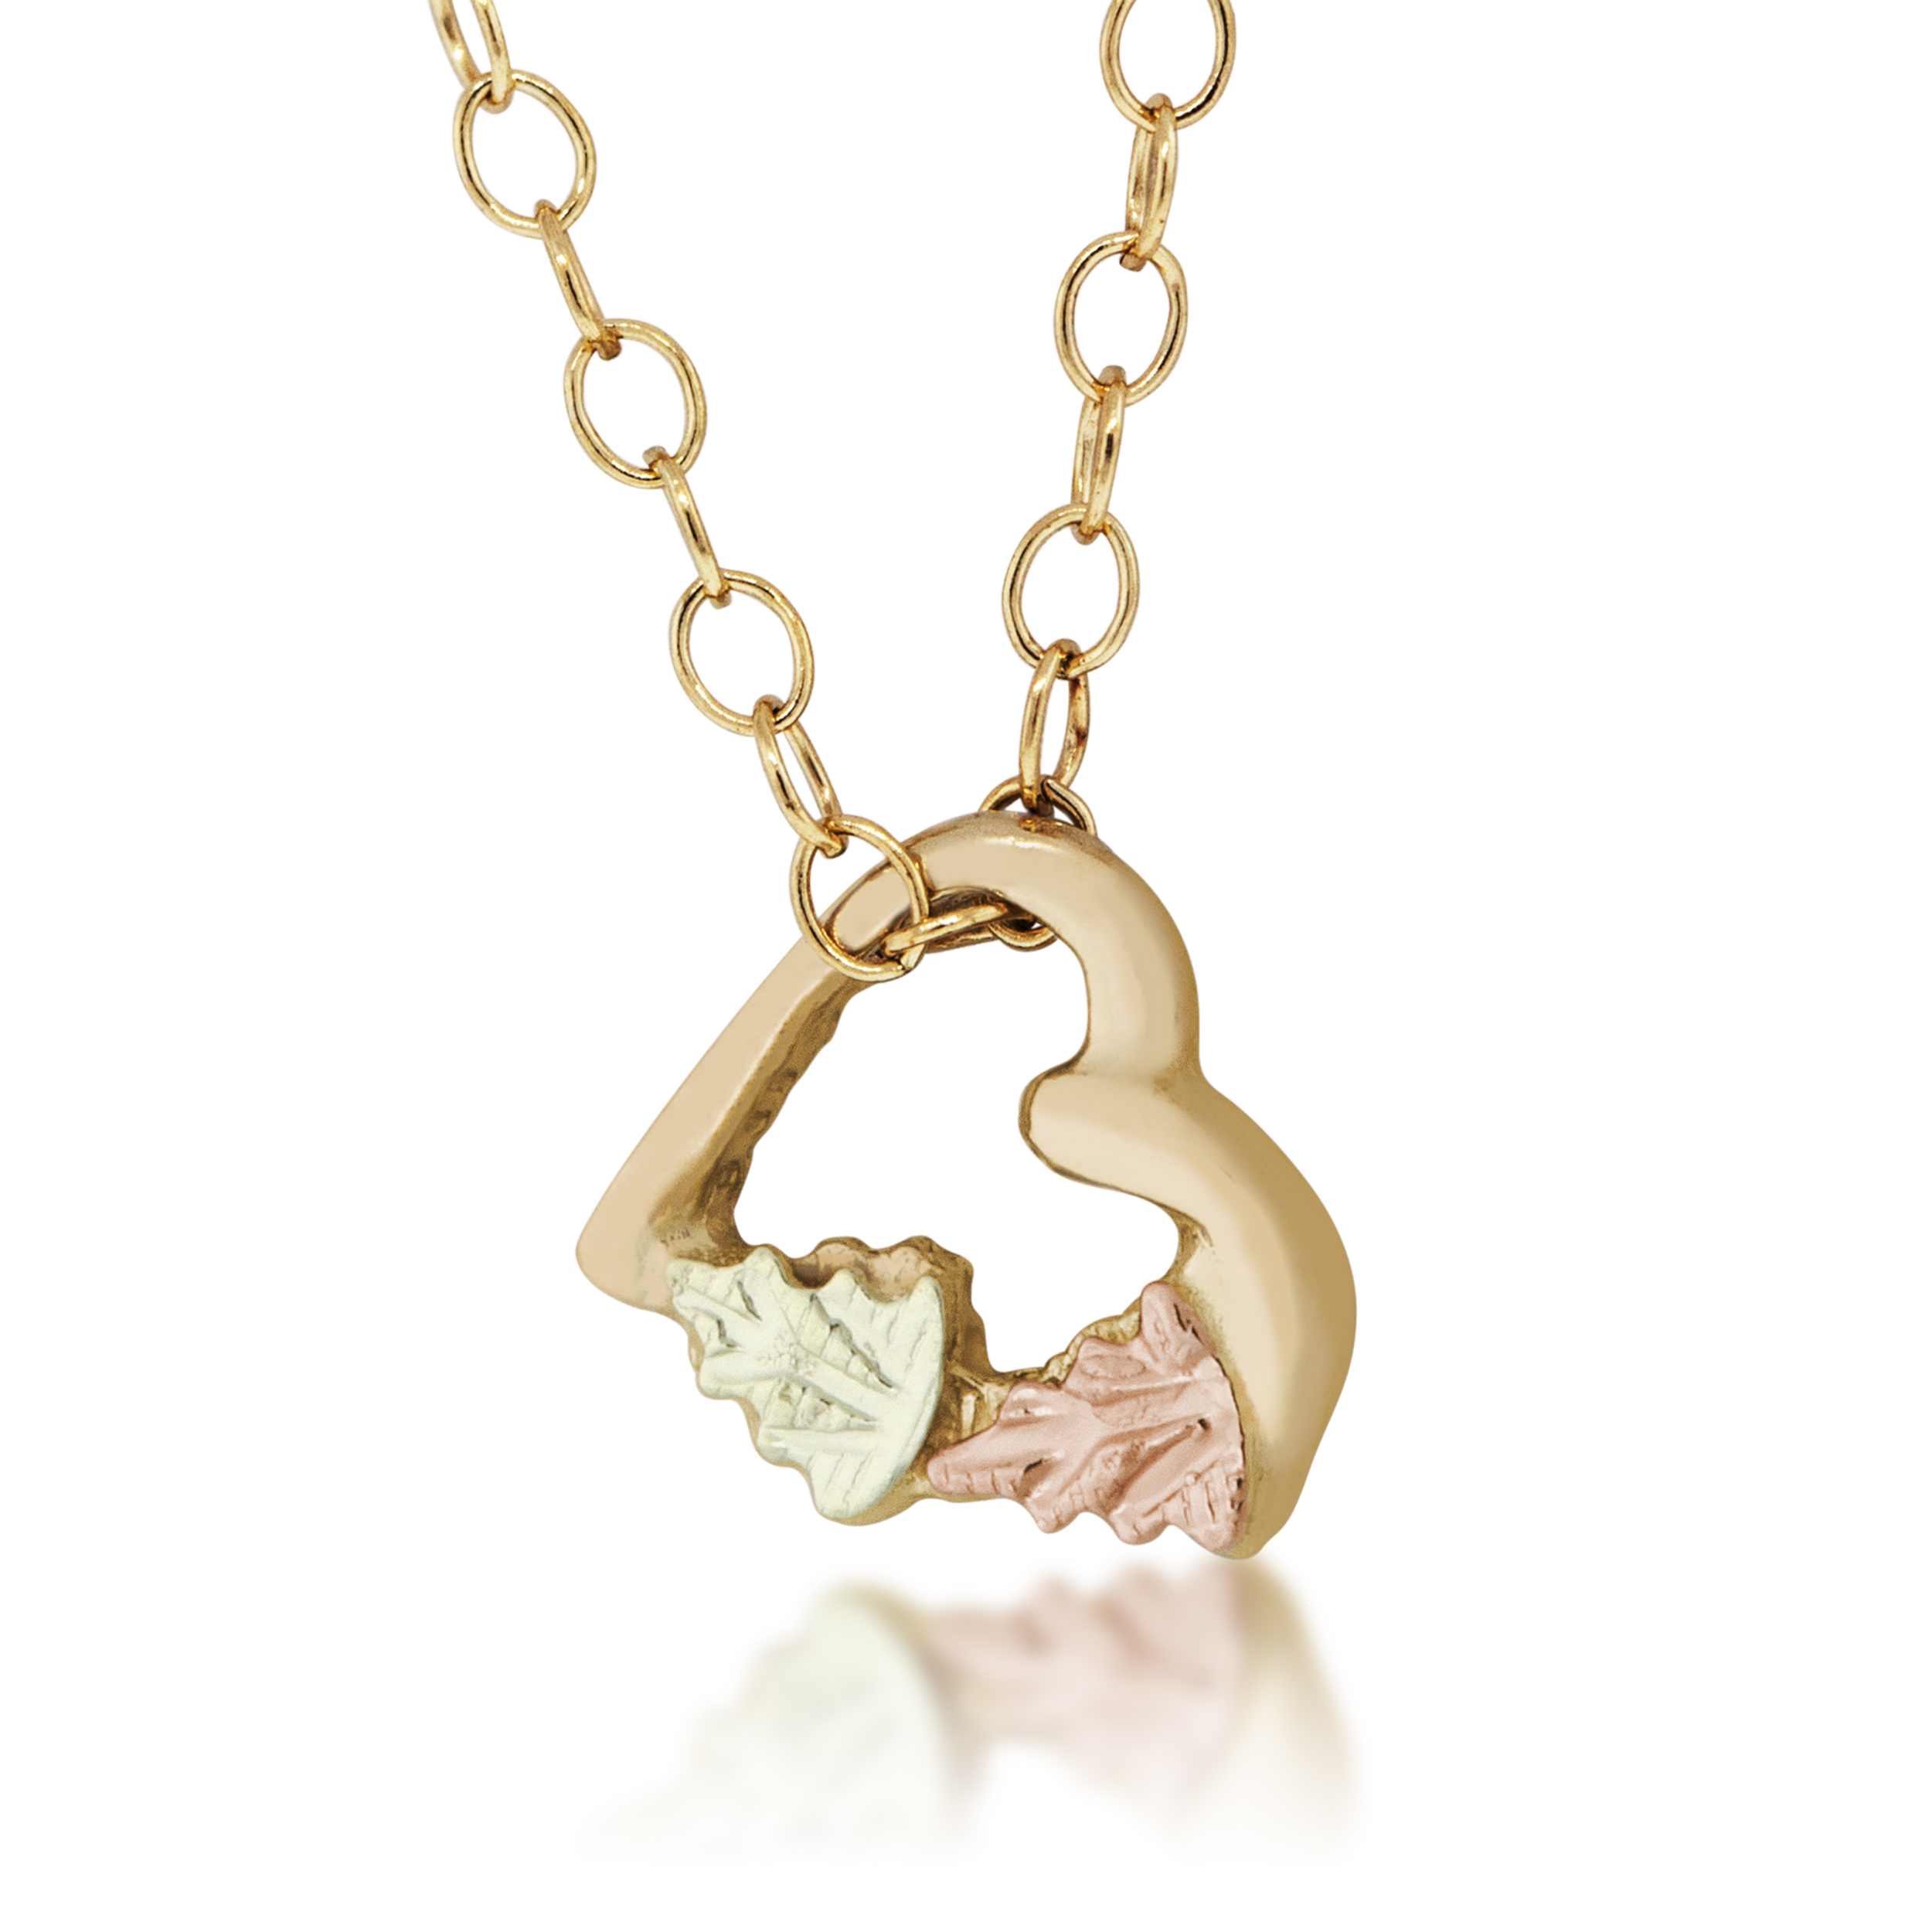 Black Hills Gold Necklace with Heart Shaped Leaf Motif Pendent. 